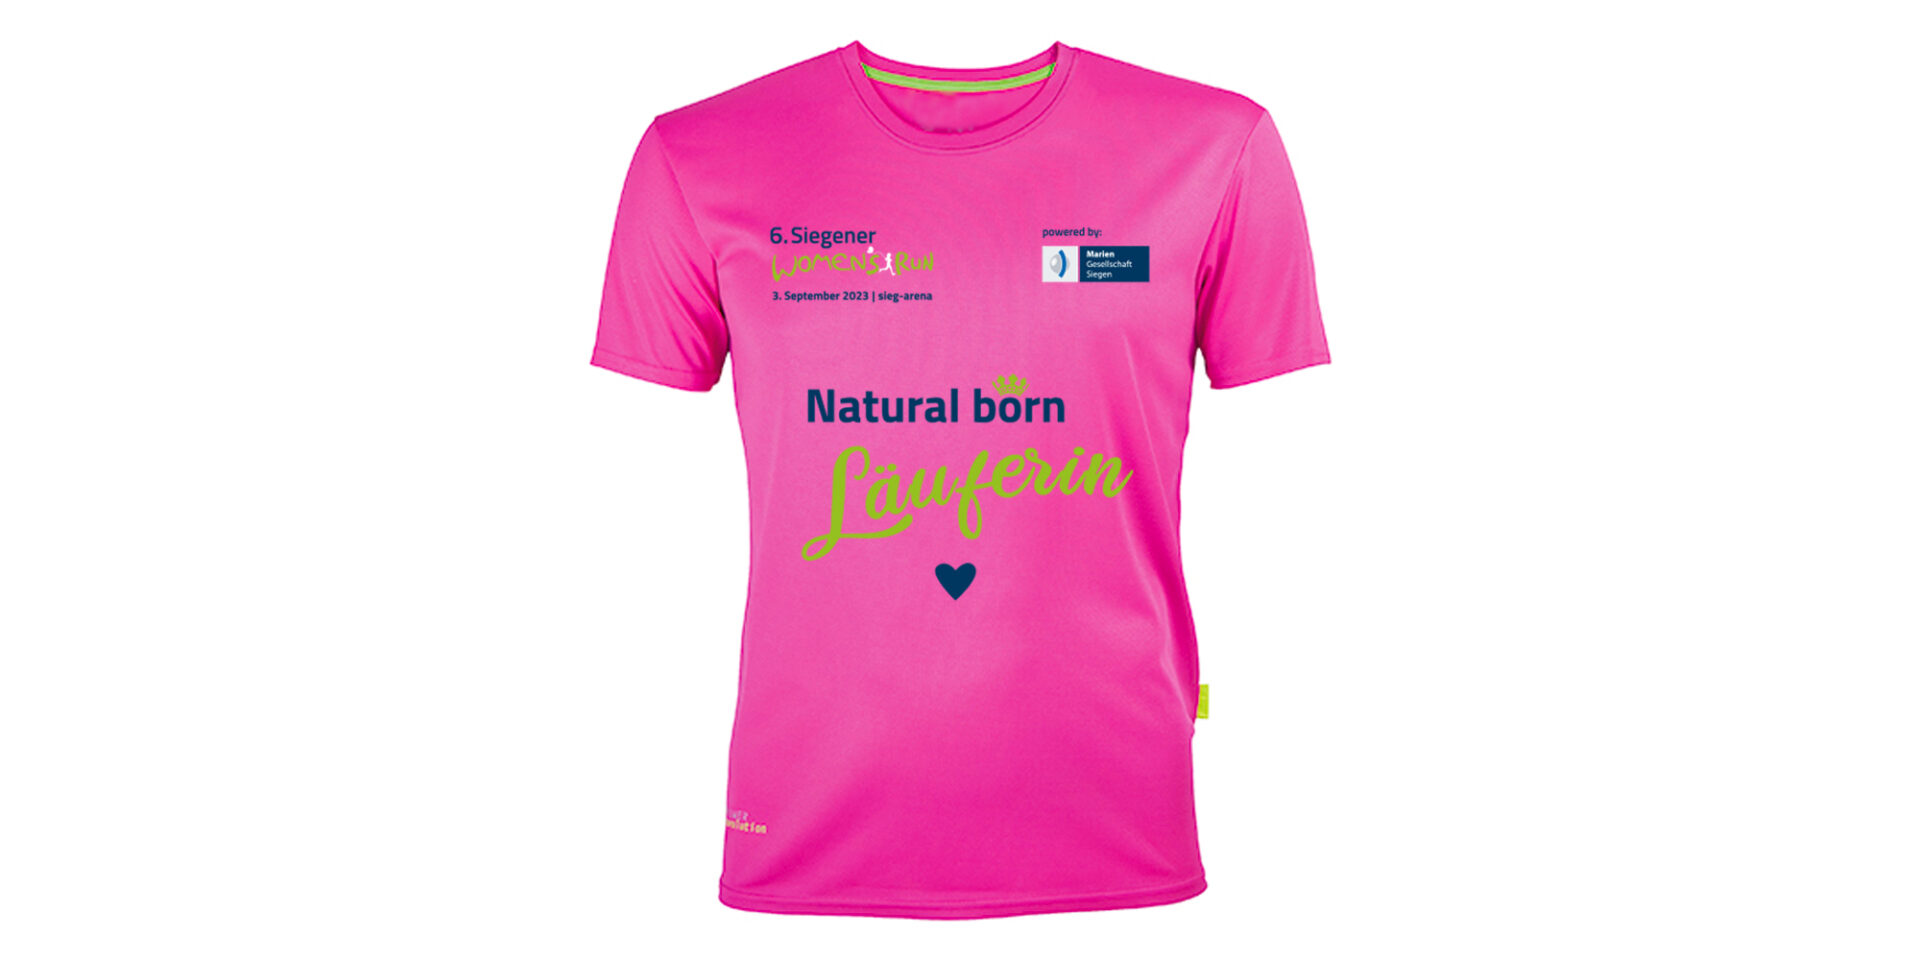 Das Women’s Run Shirt: Natural born Läuferin